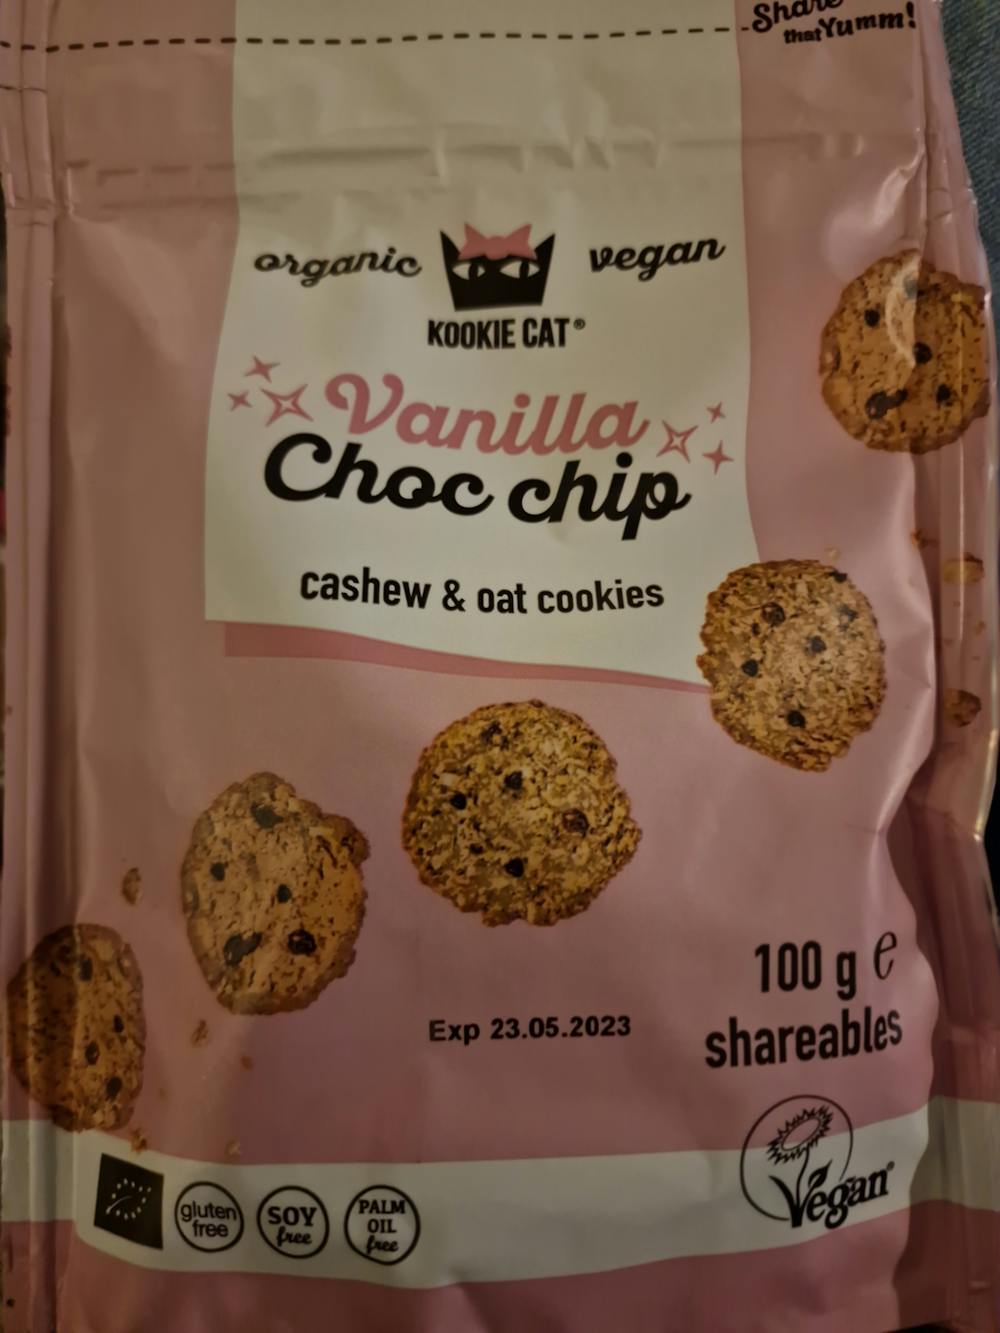 Vanilla choc chip, Kookie cat